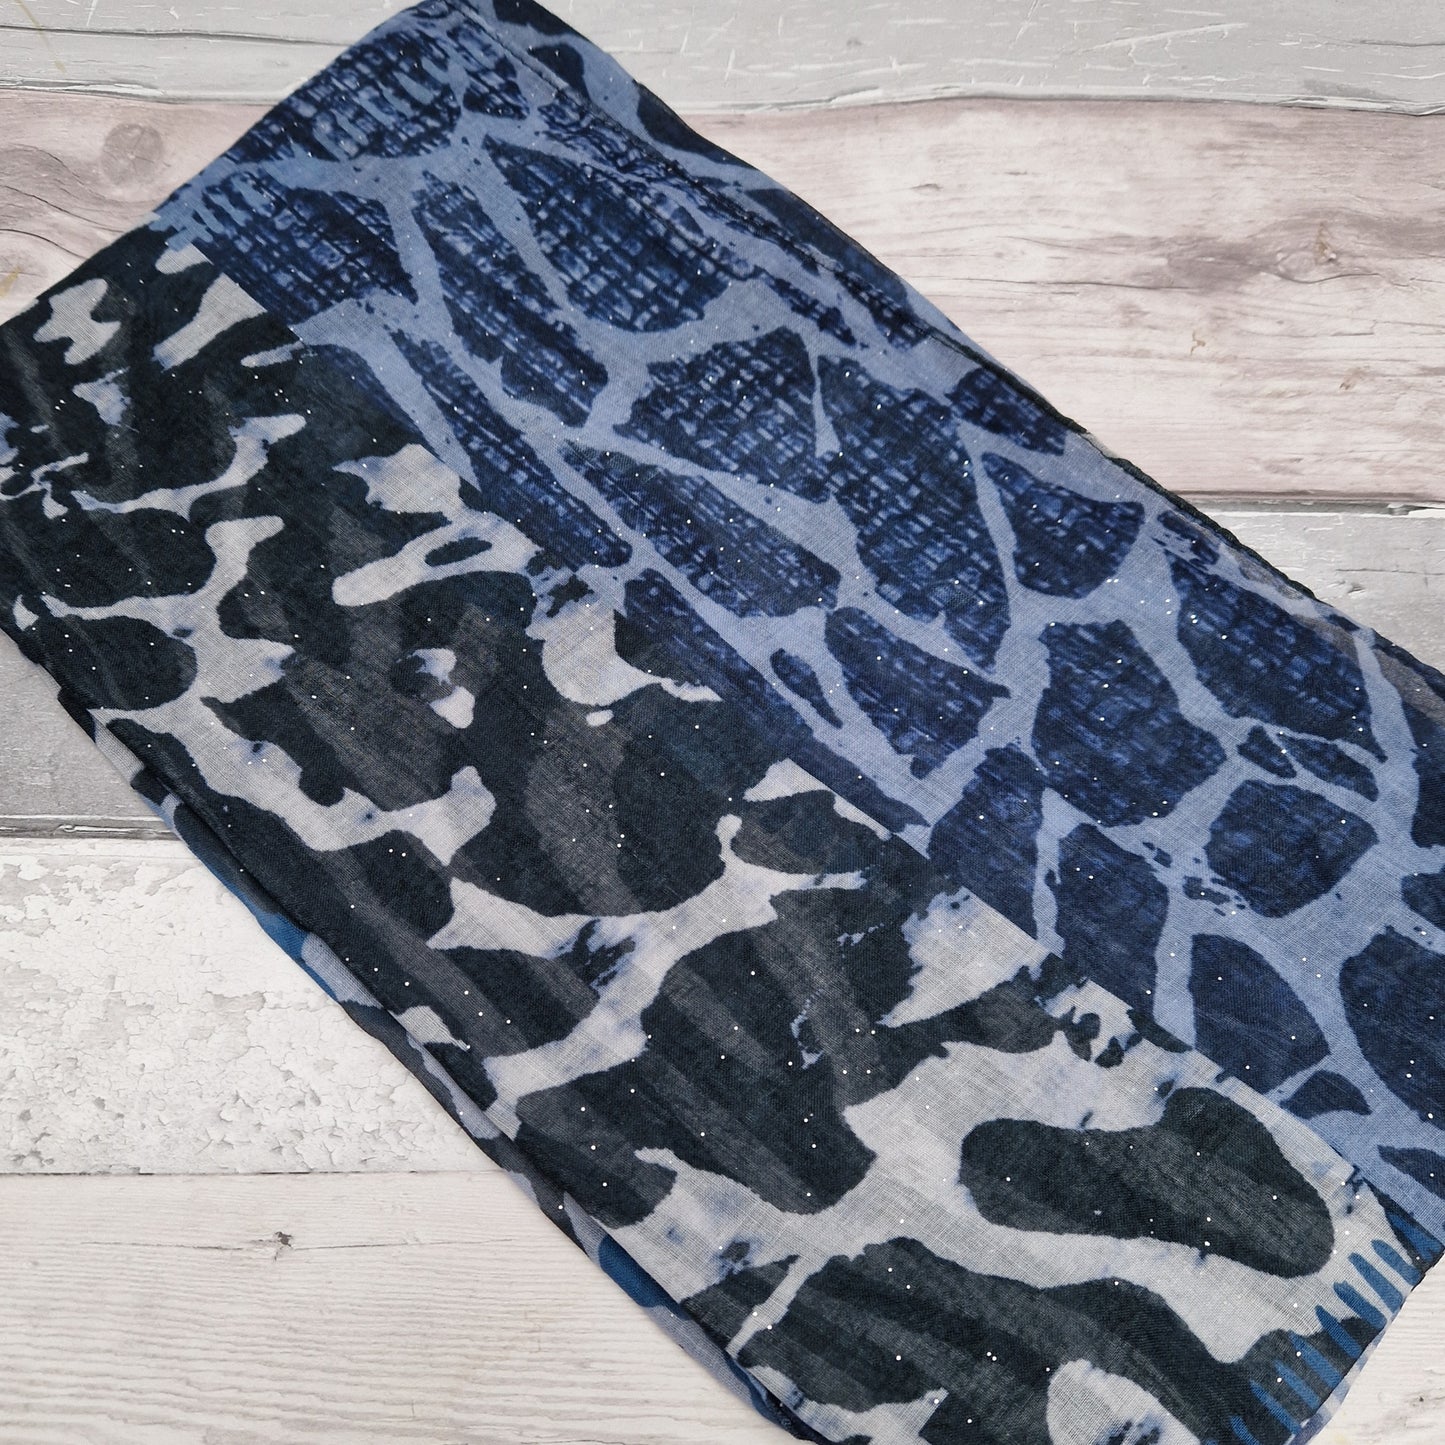 Animal Print scarf in blue tones.